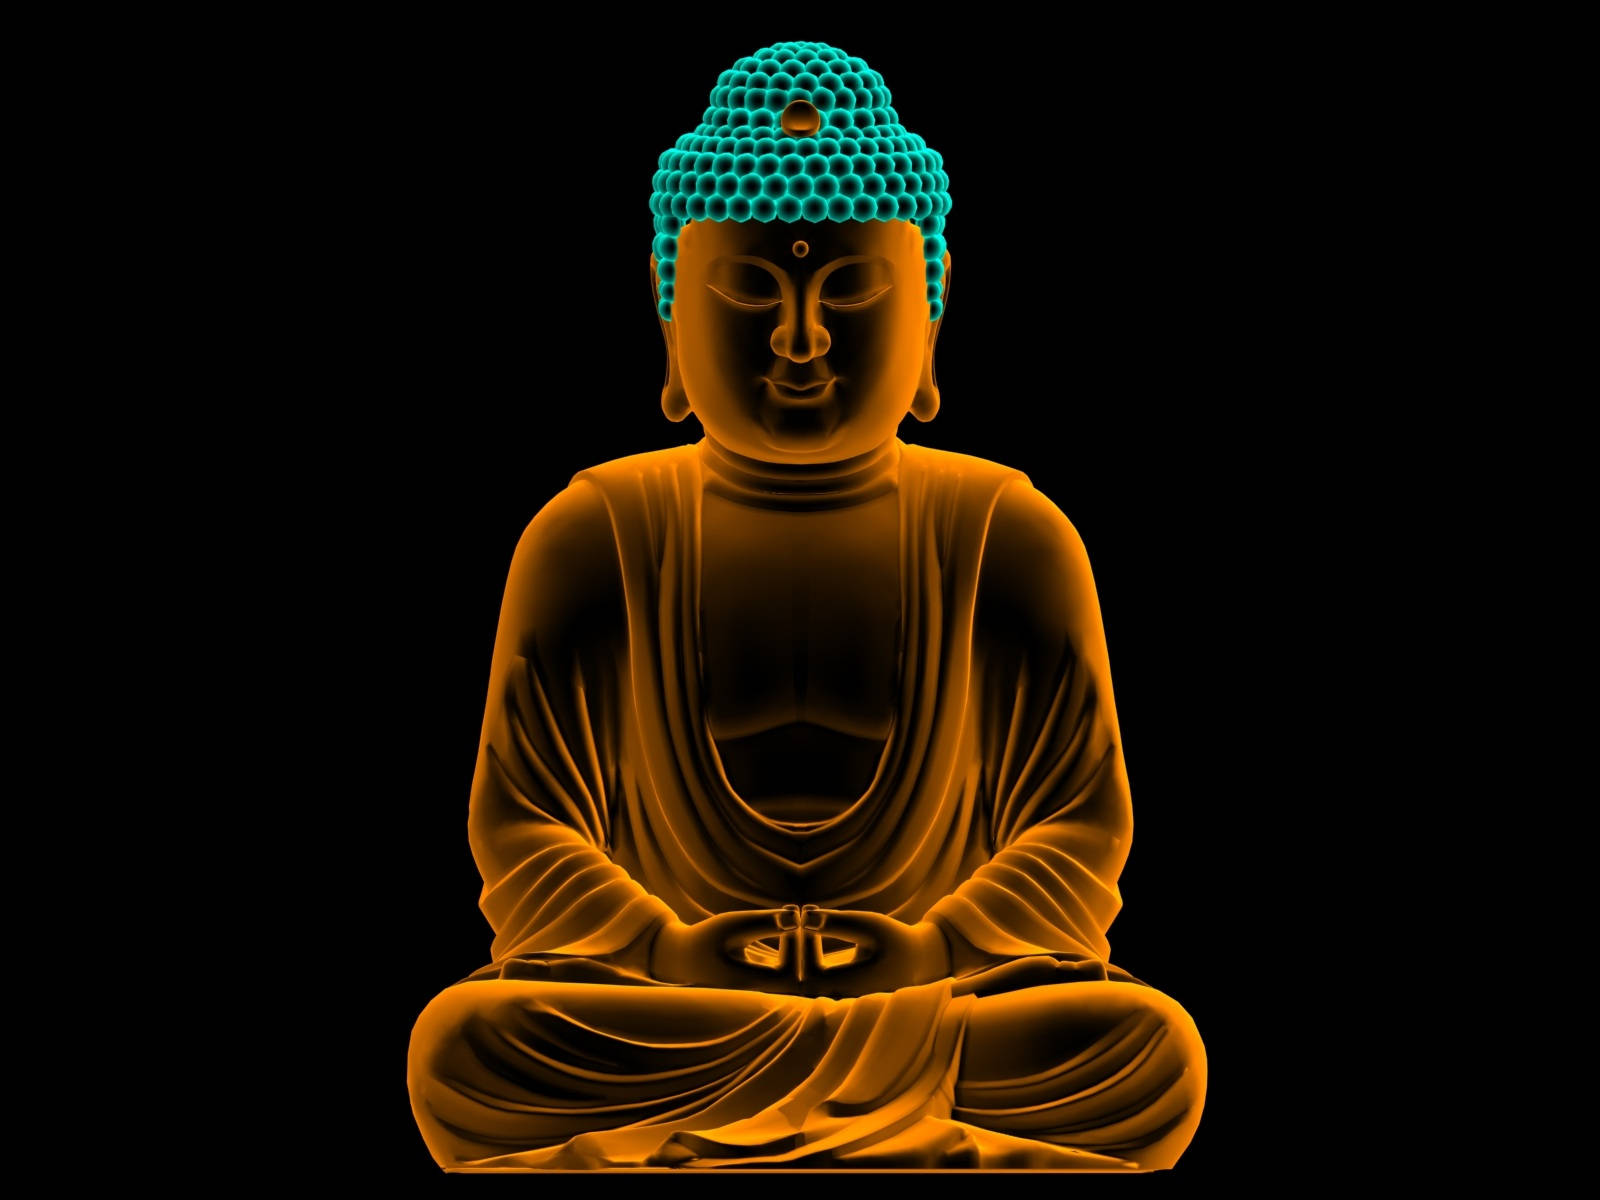 Buddha 3d Luminous Orange Statue Wallpaper